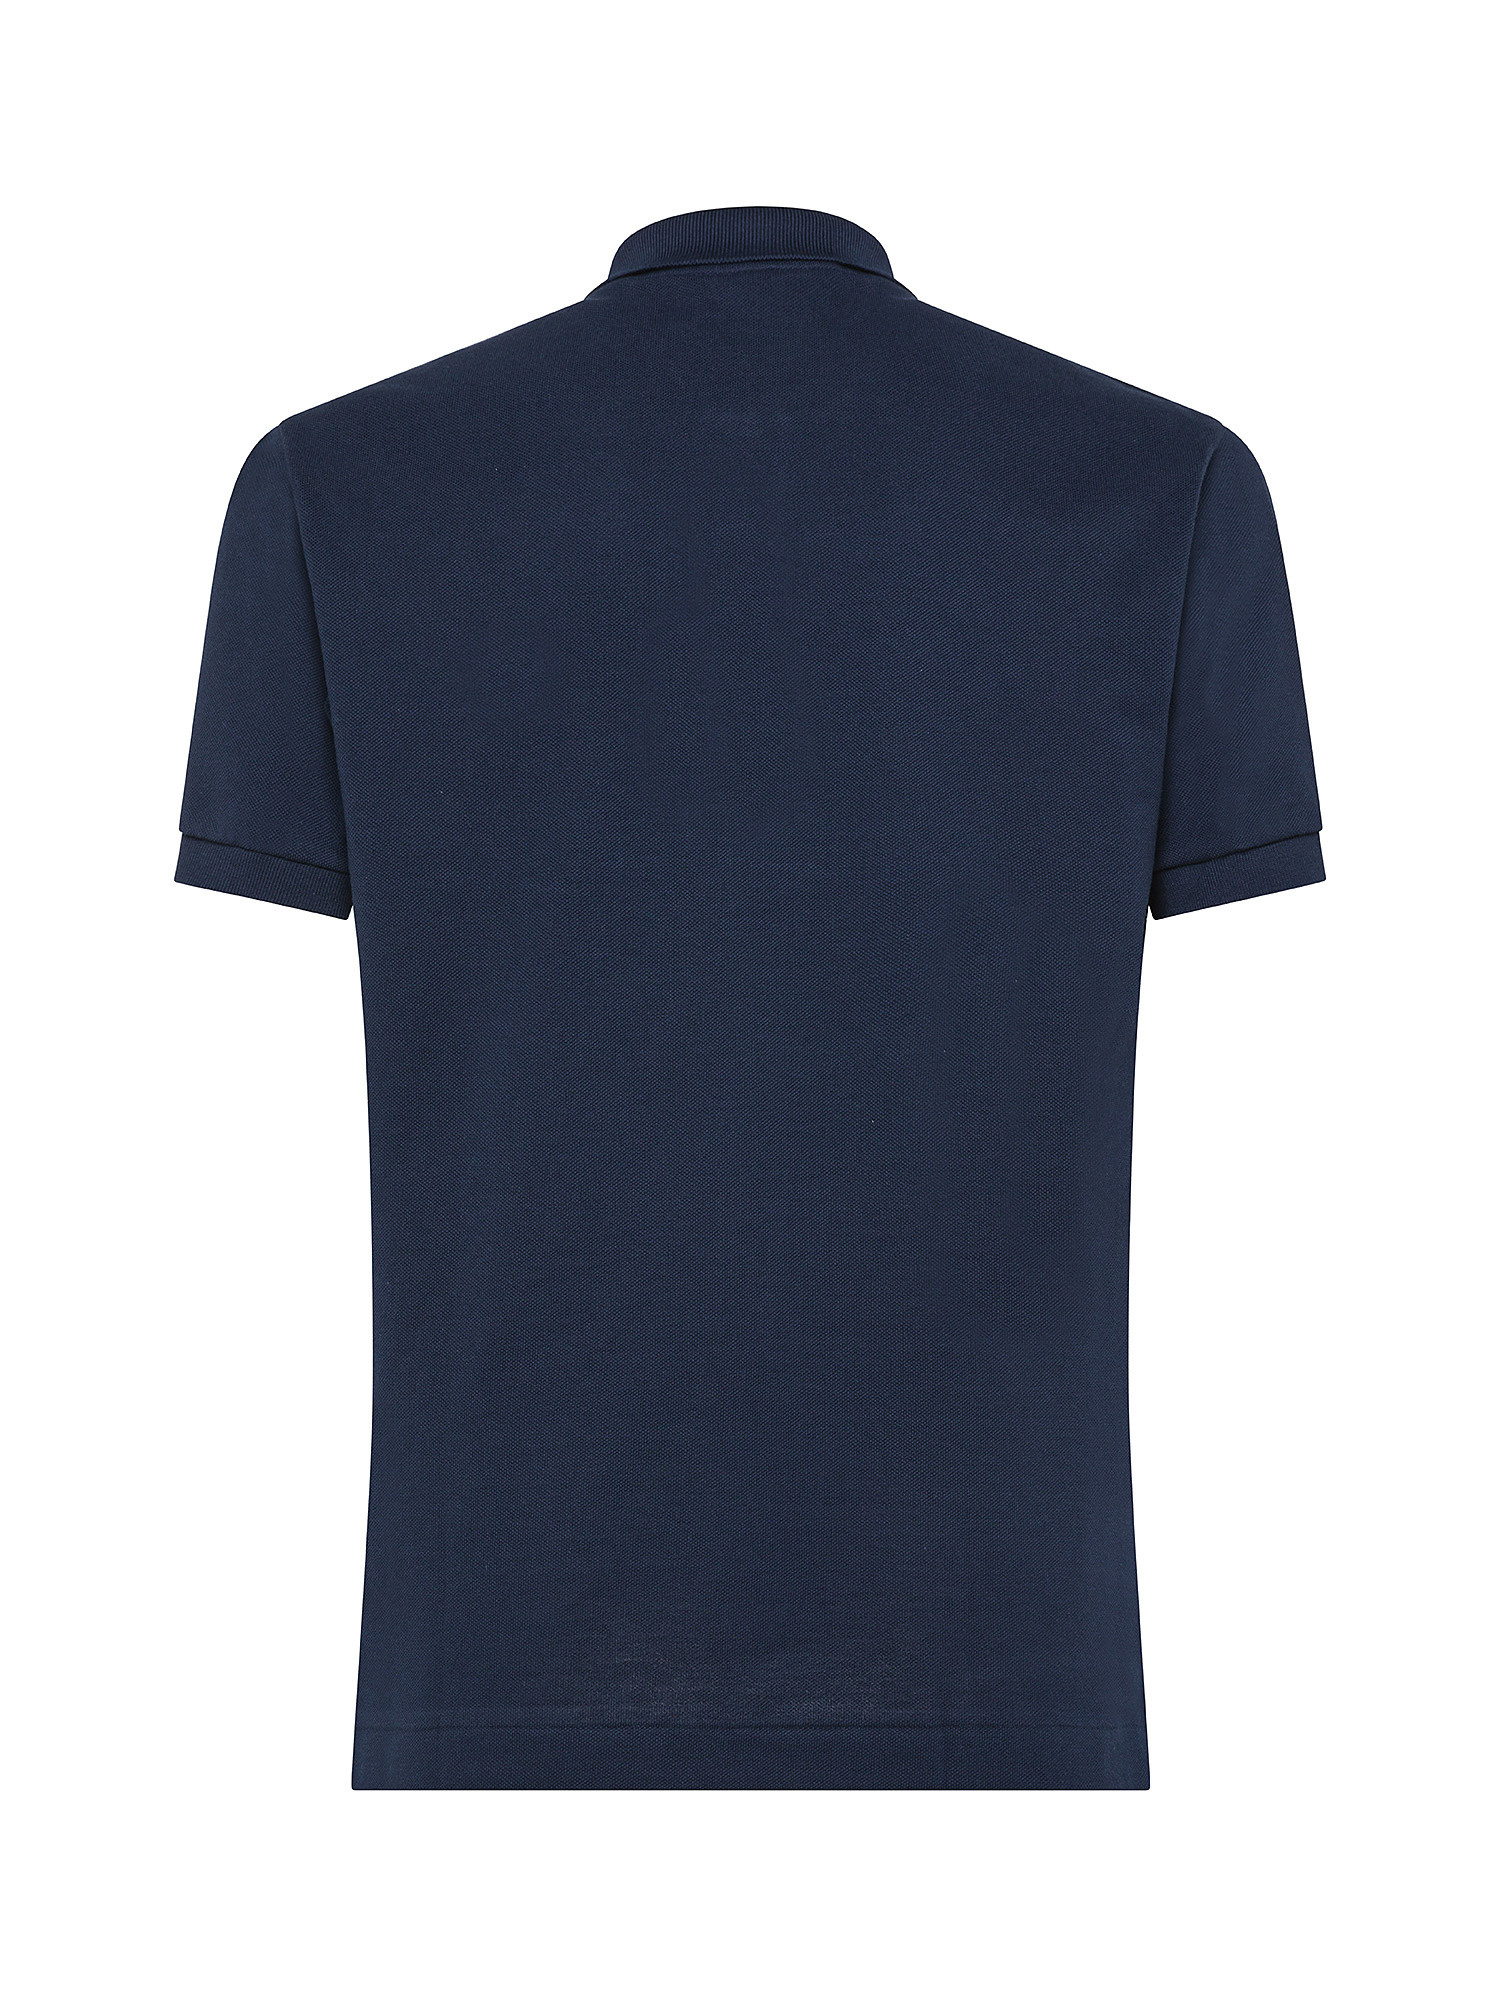 Lacoste - Classic cut polo shirt in petit piquè cotton, Dark Blue, large image number 1